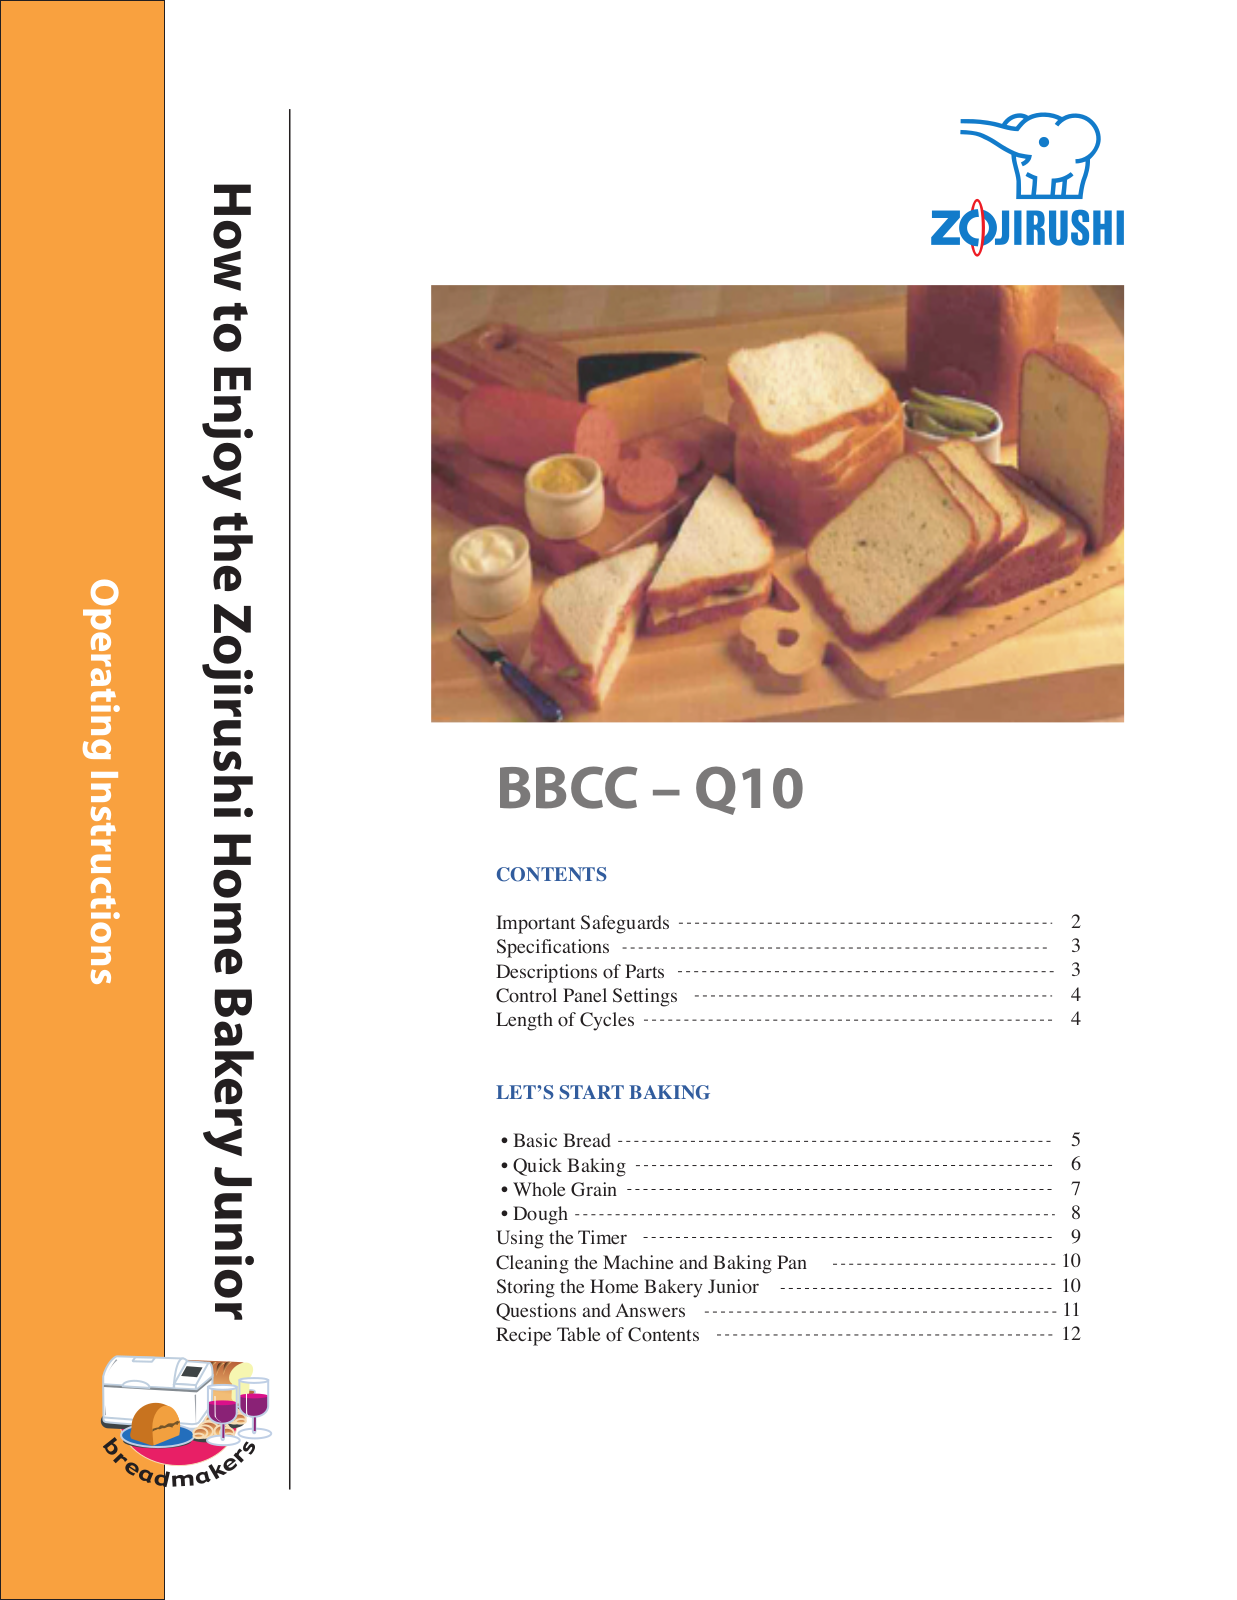 Zojirushi BBCC-Q10 Owner's Manual